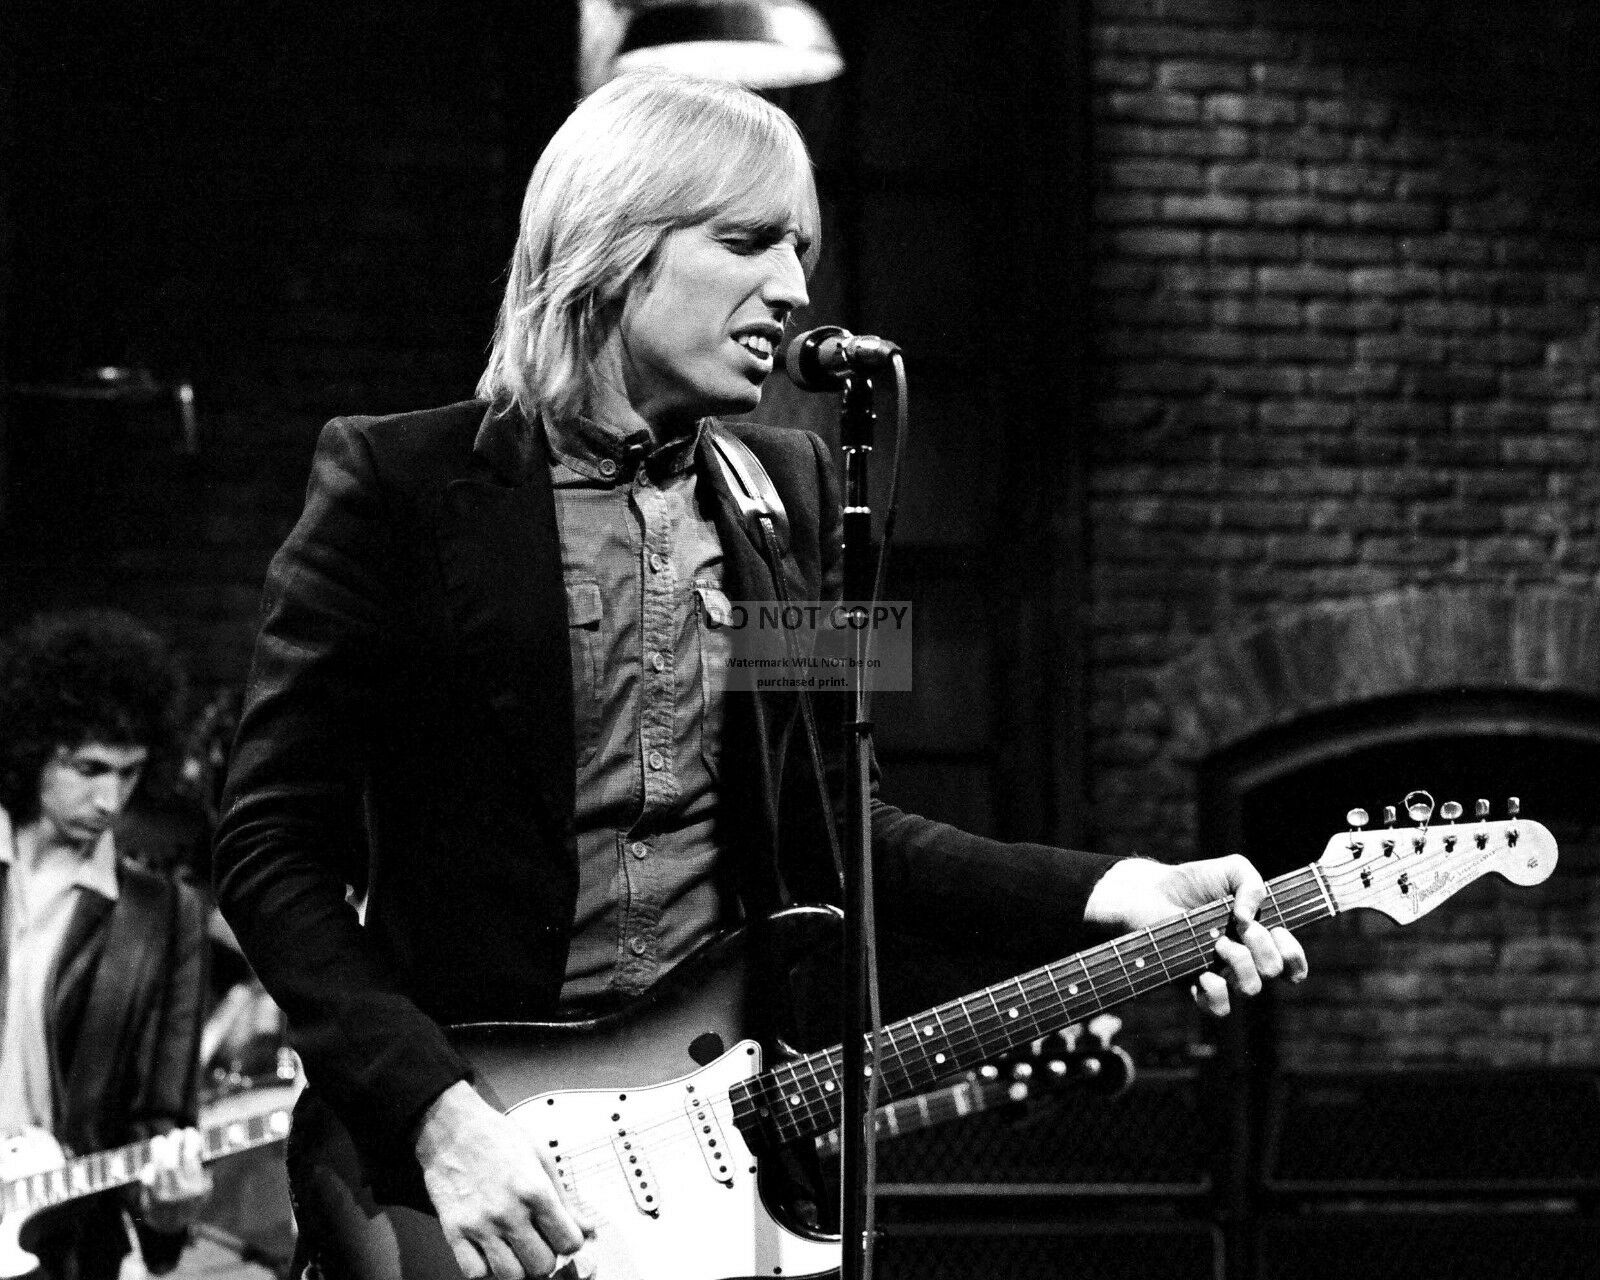 Tom Petty Legendary Musician Singer Songwriter - 8x10 Publicity Photo (fb-477)